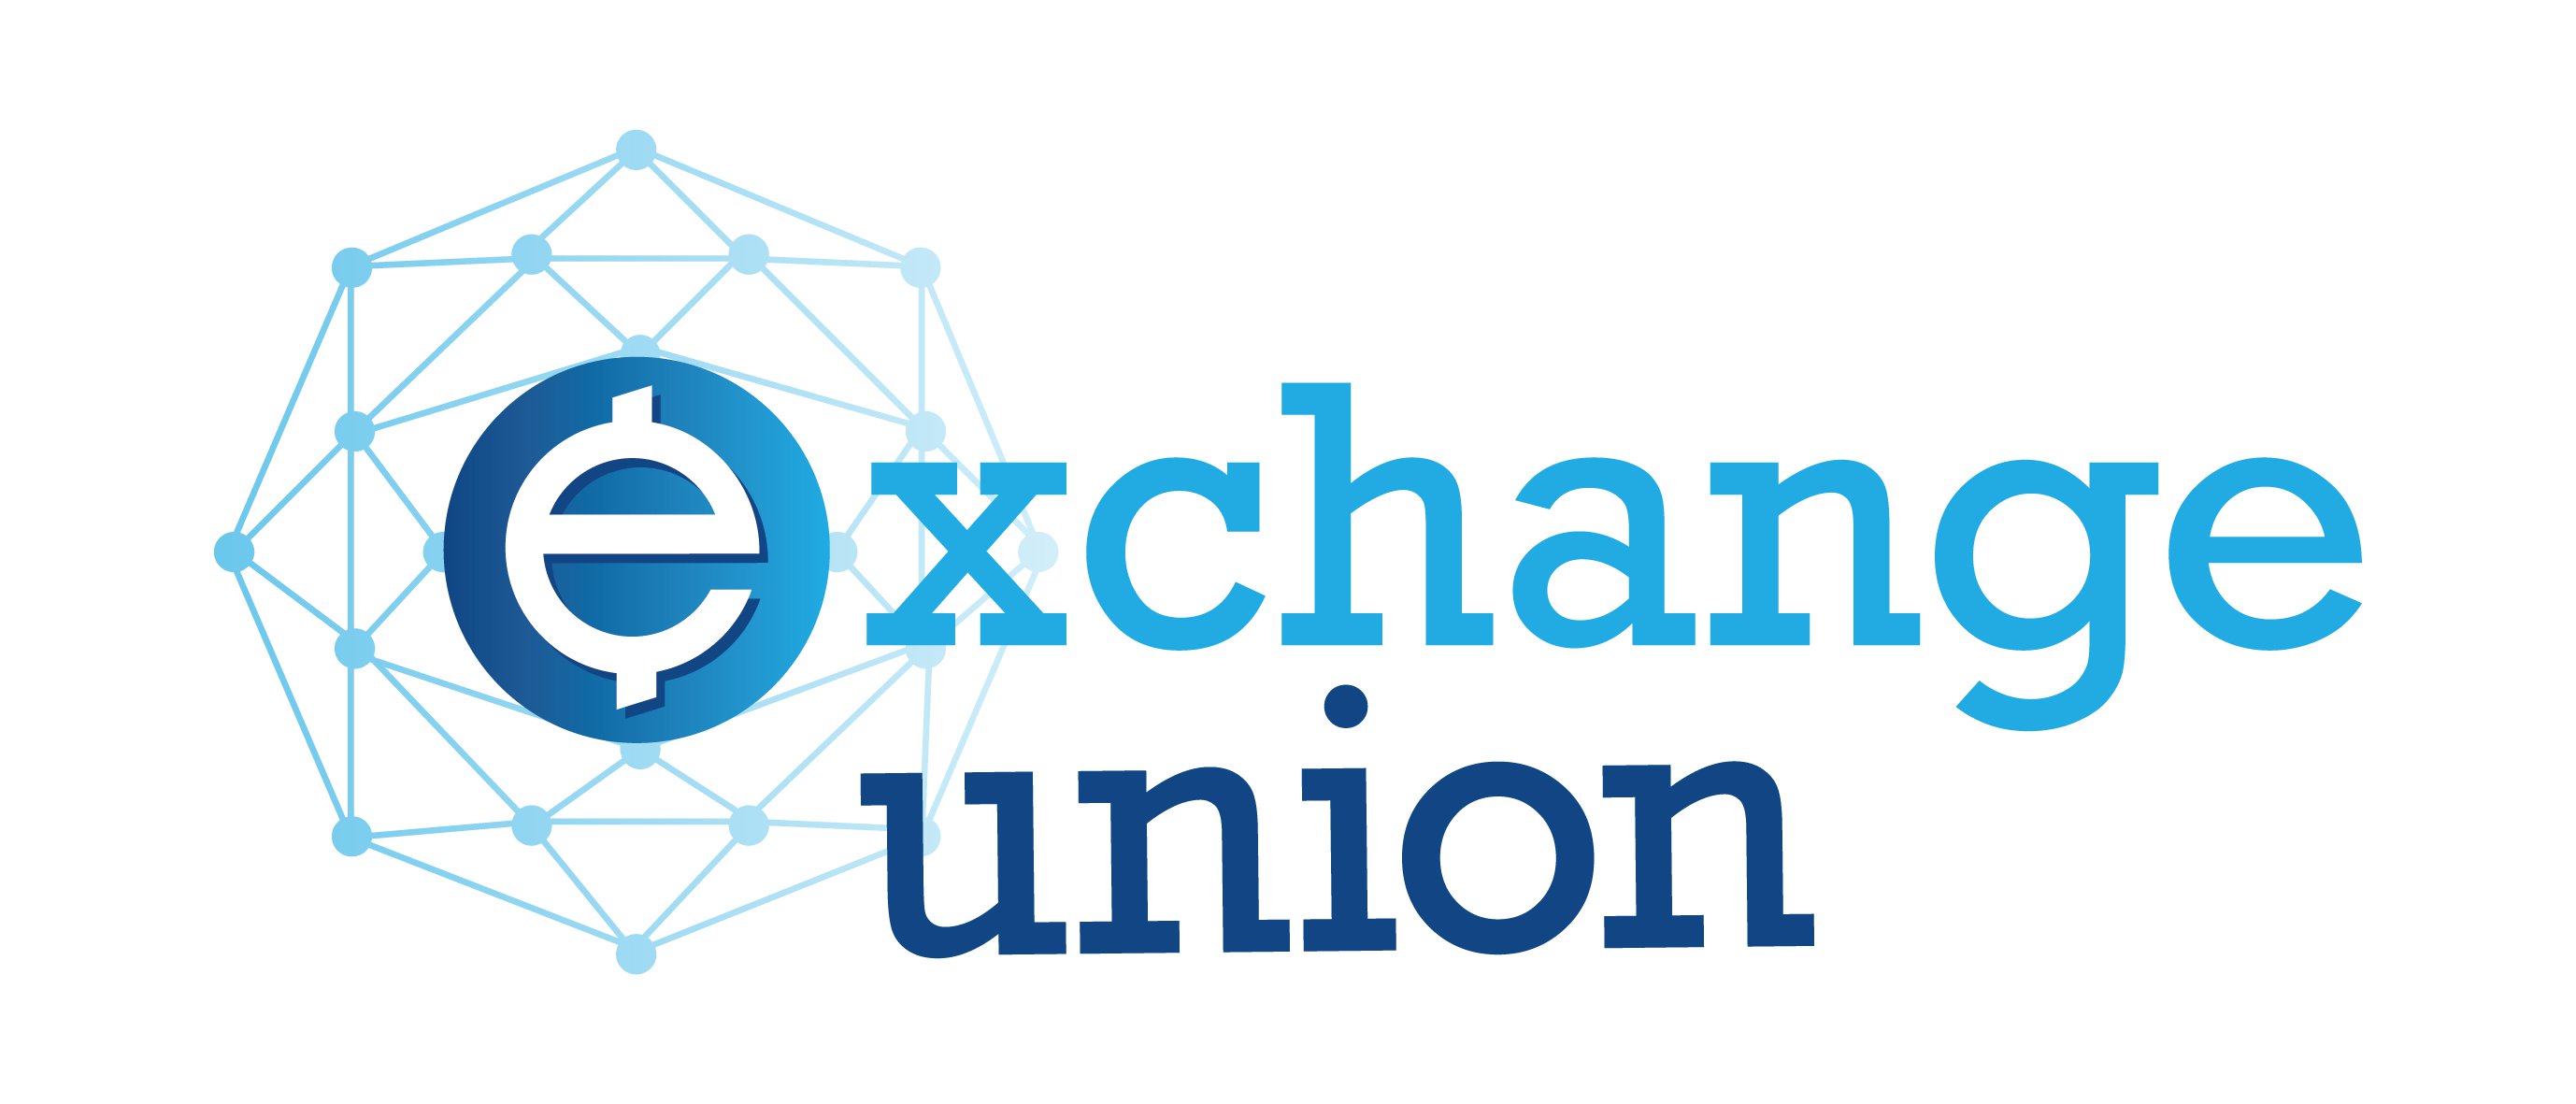 Crypto exchange union сколько будет 100 биткоинов в рублях